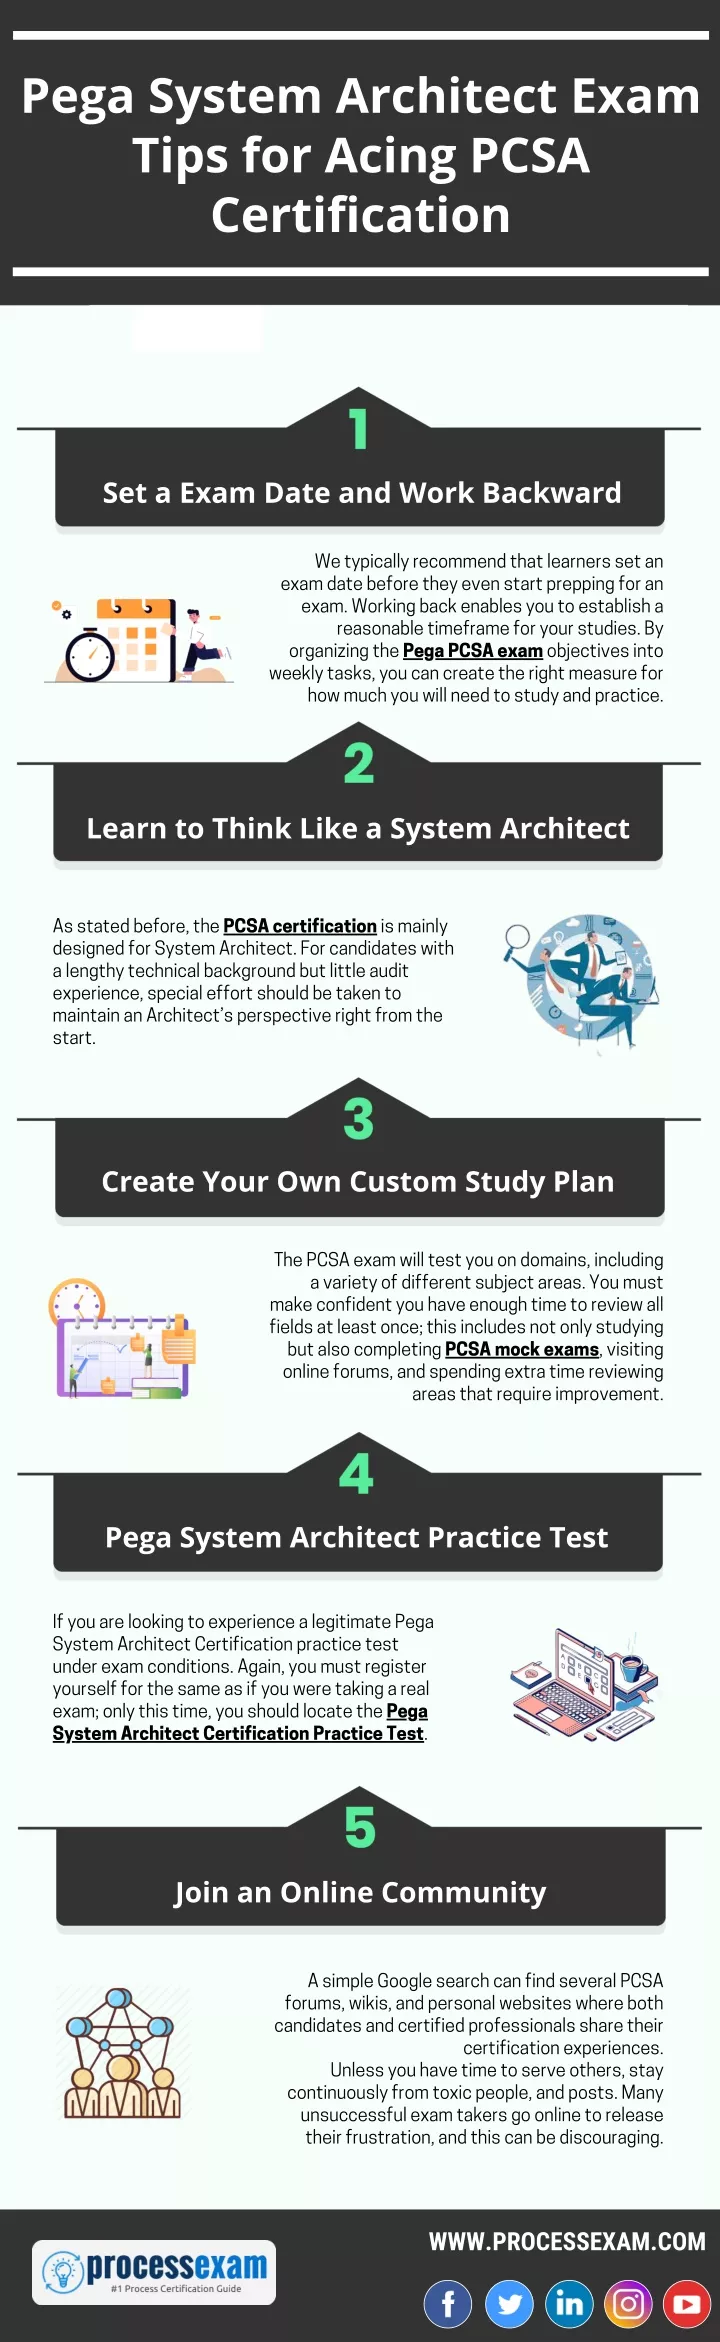 pega system architect exam tips for acing pcsa